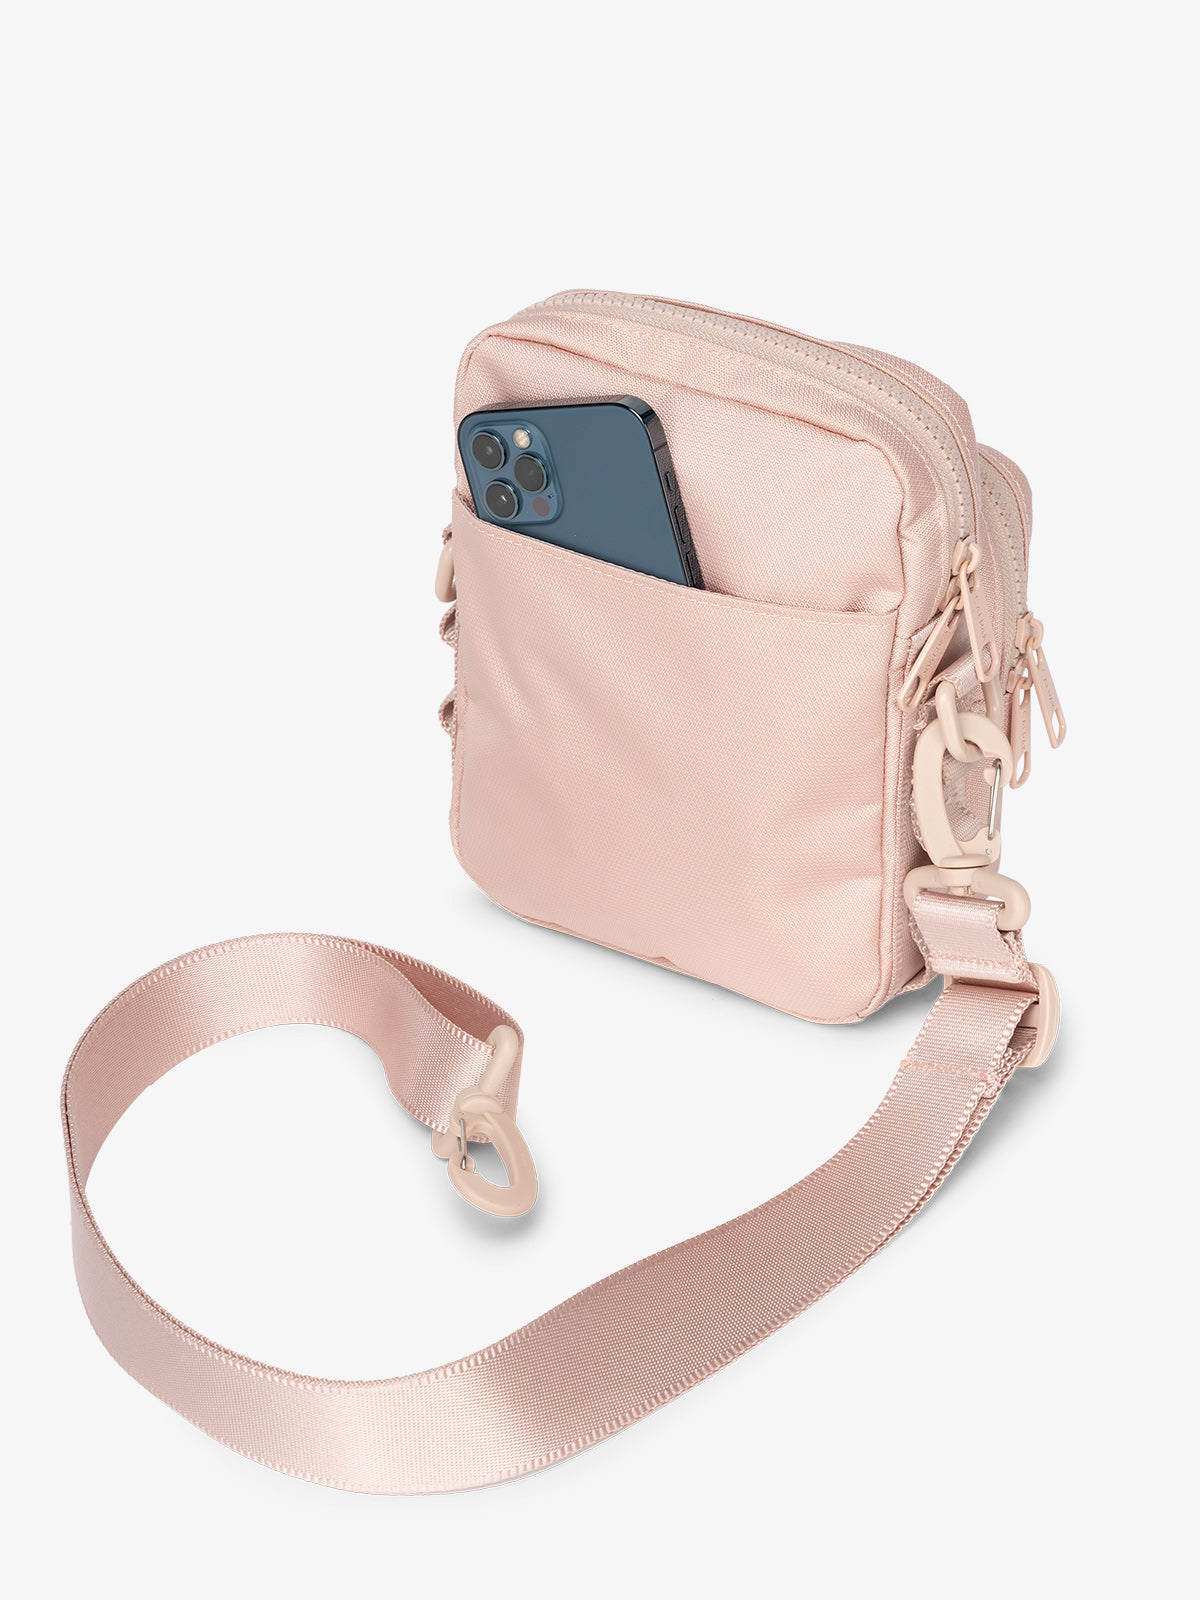 Back-view of pink sands CALPAK Stevyn Mini Crossbody Bag with detachable shoulder strap and back-slip pocket for cell phone or other belongings